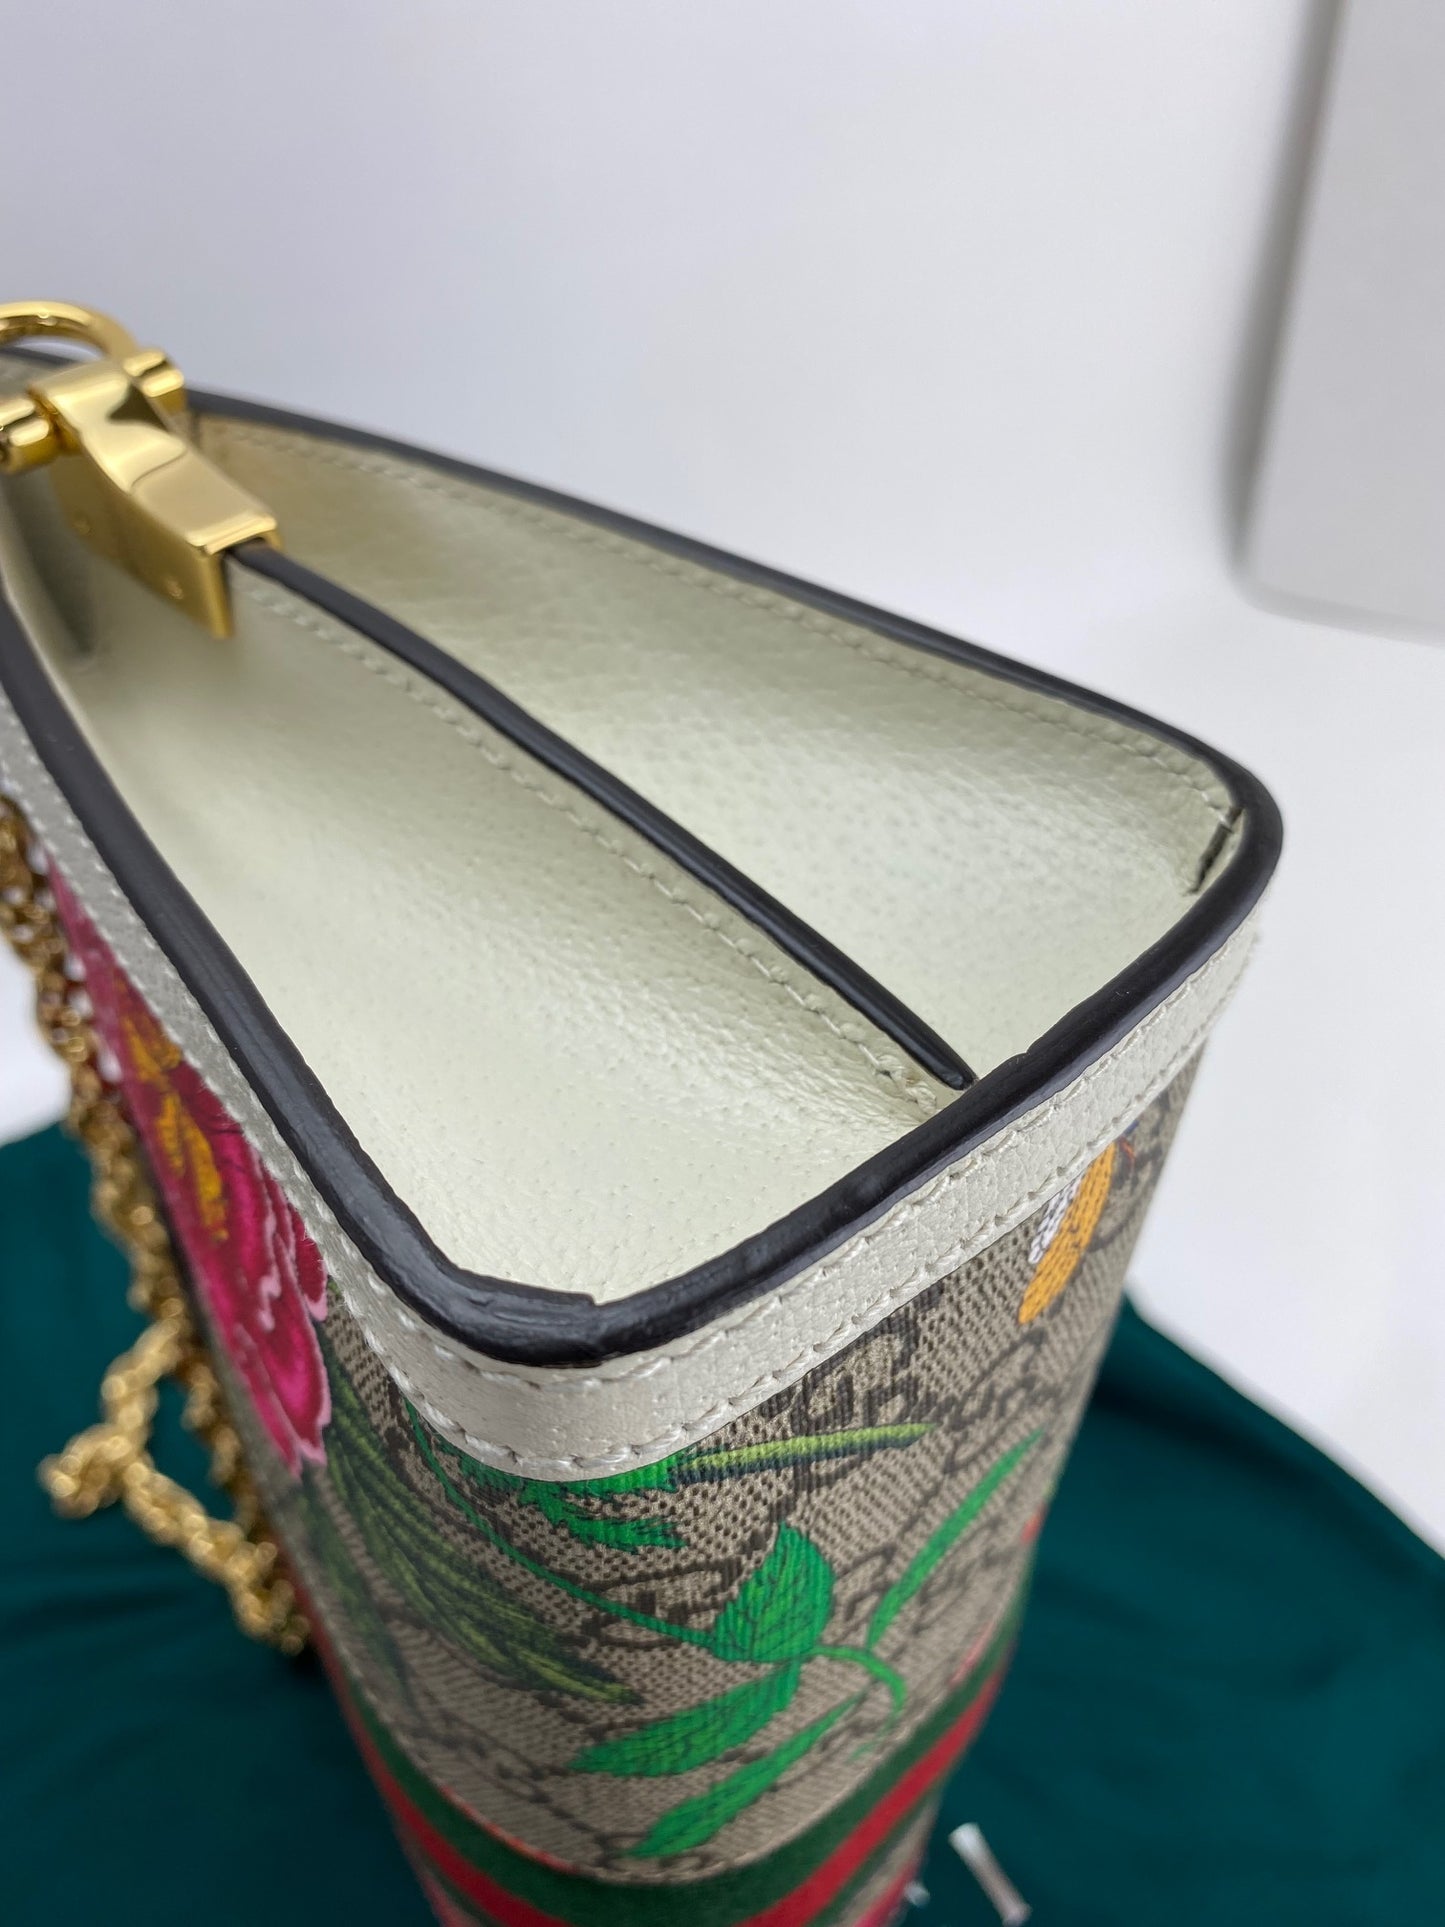 Beige Ophidia small GG-Supreme canvas shoulder bag, Gucci